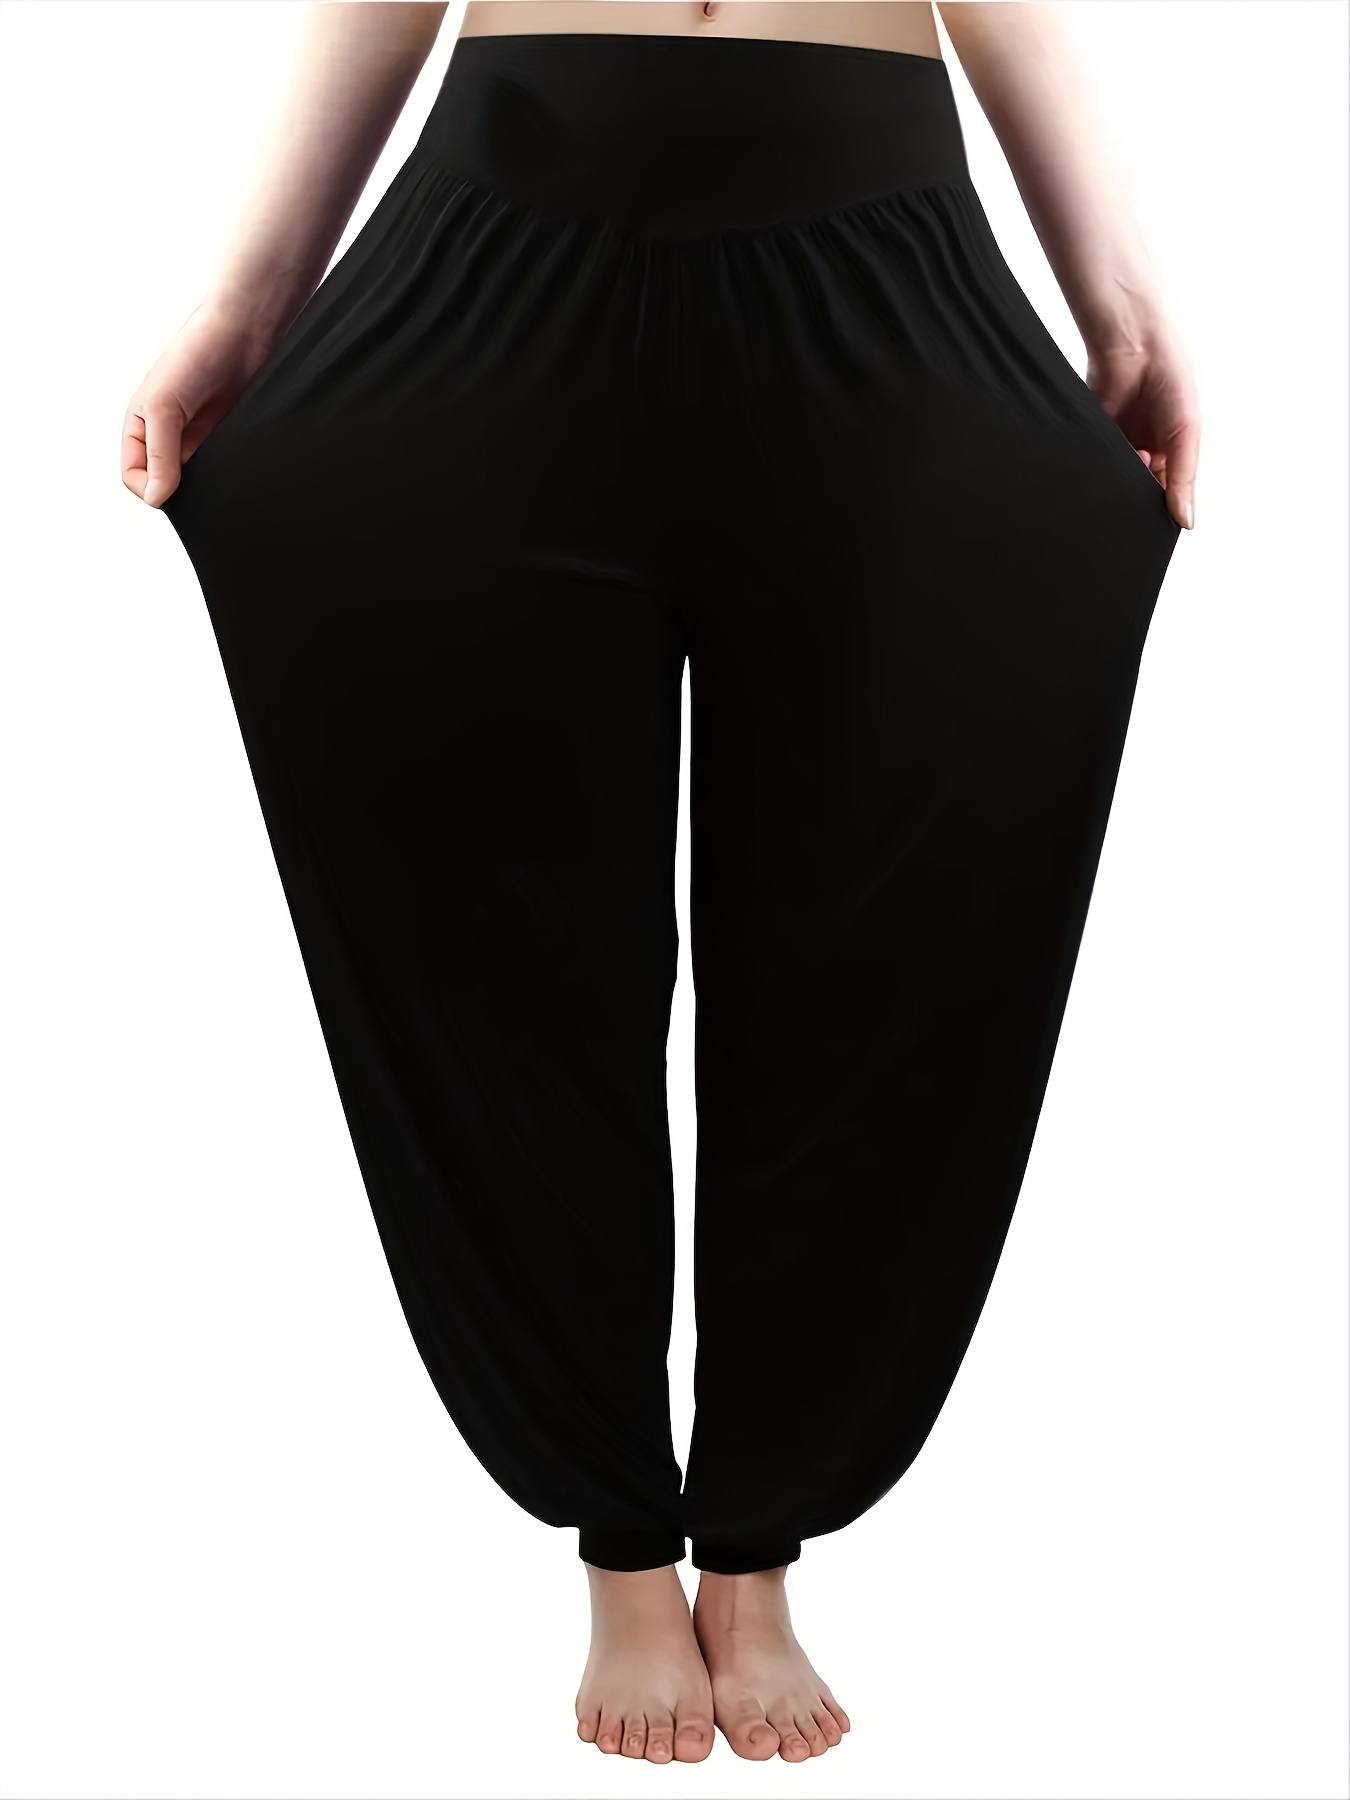 NATURAL BLACK THAI Yoga Pants Plain Harem Pants Comfy Elastic